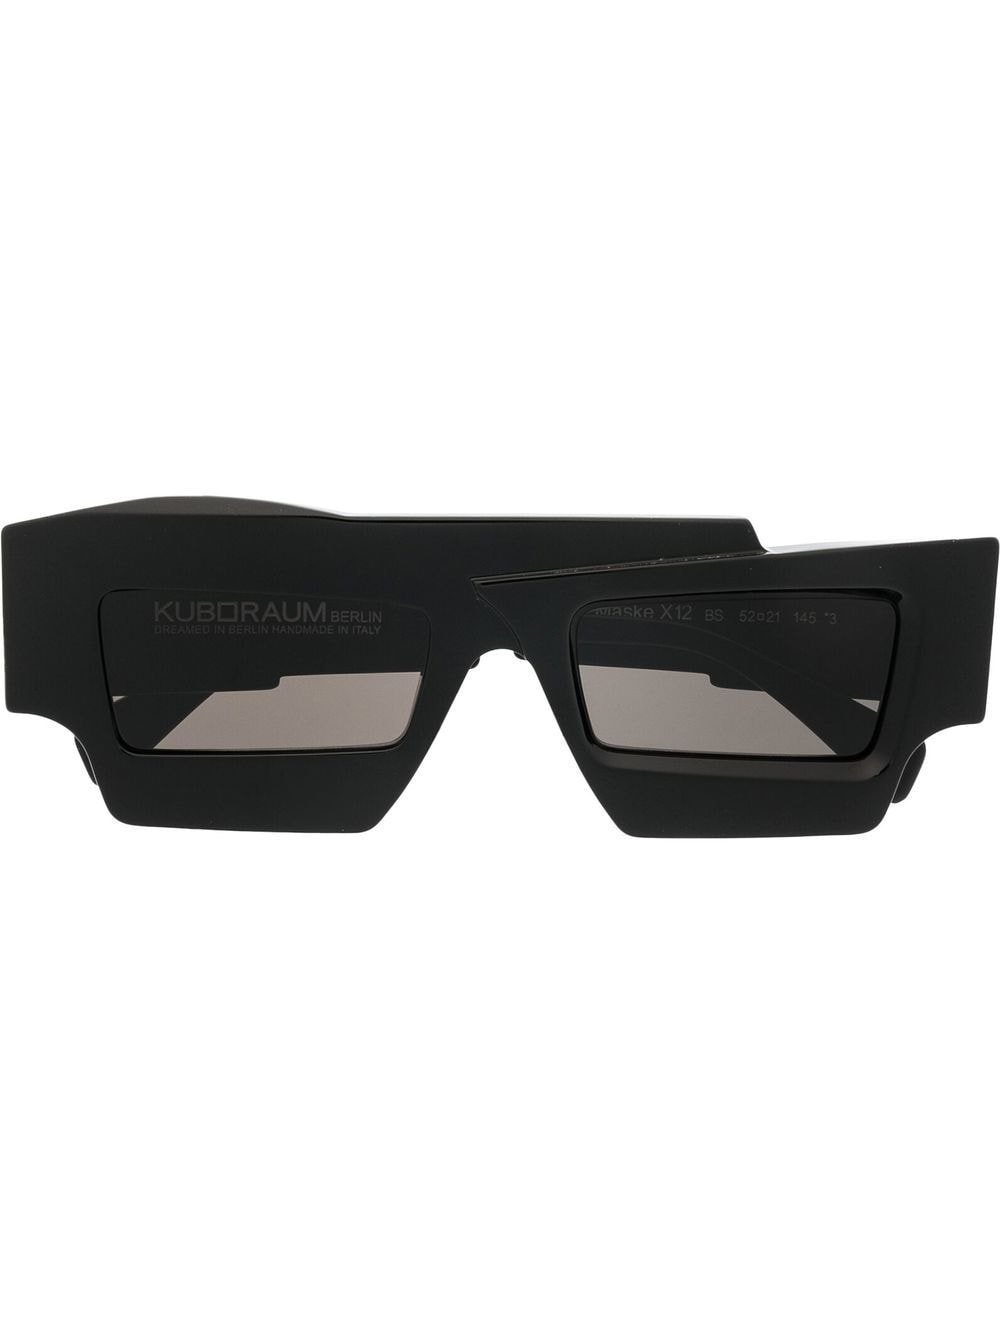 Image 1 of Kuboraum square tinted sunglasses